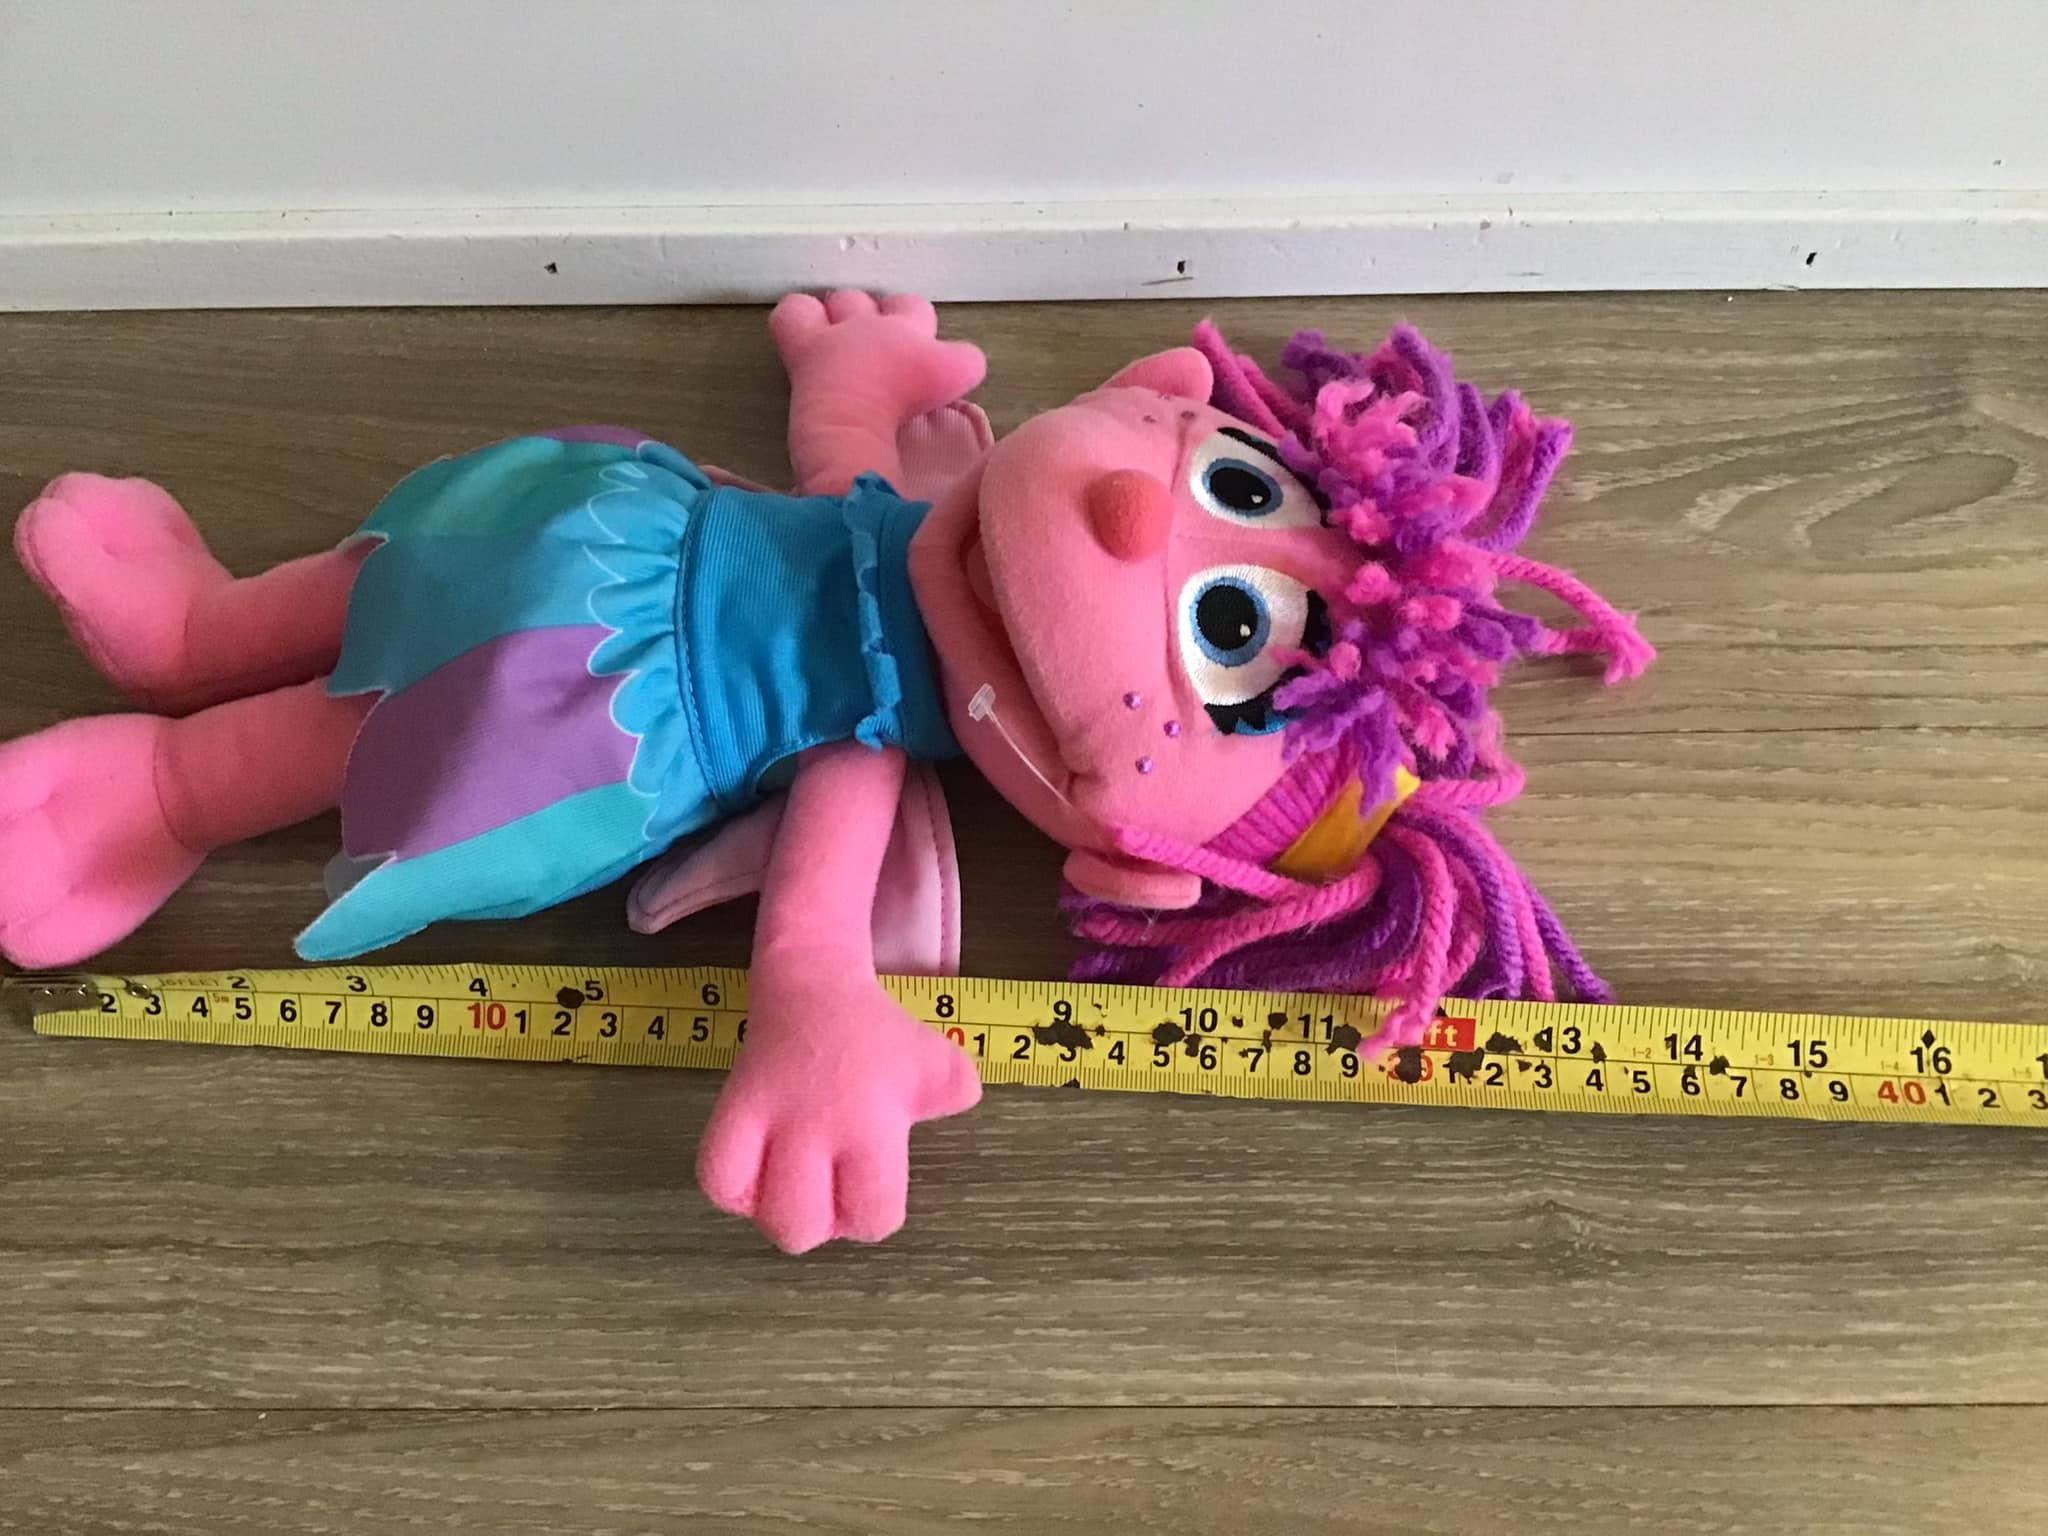 Sesame Street: Abby Cadabby Plush Soft Toy - Funstra